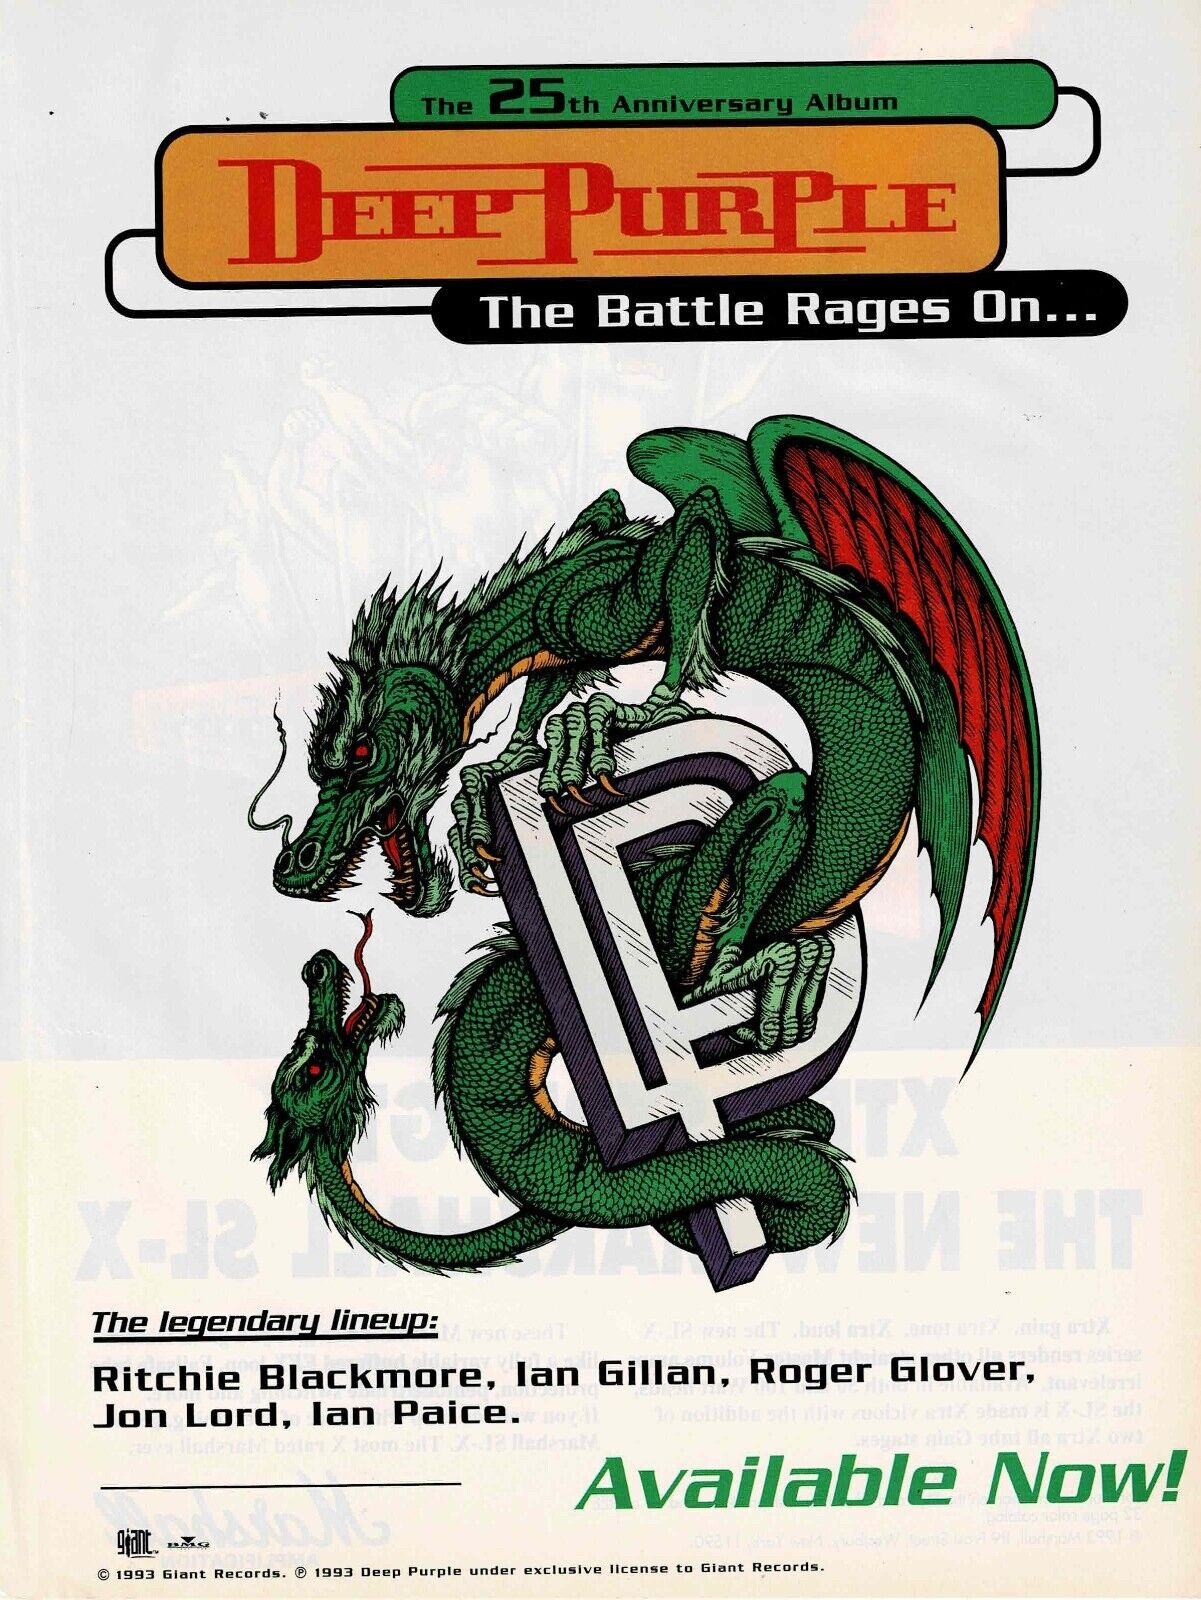 DEEP PURPLE - The Battle Rages On... - 1993 Promo Print Ad